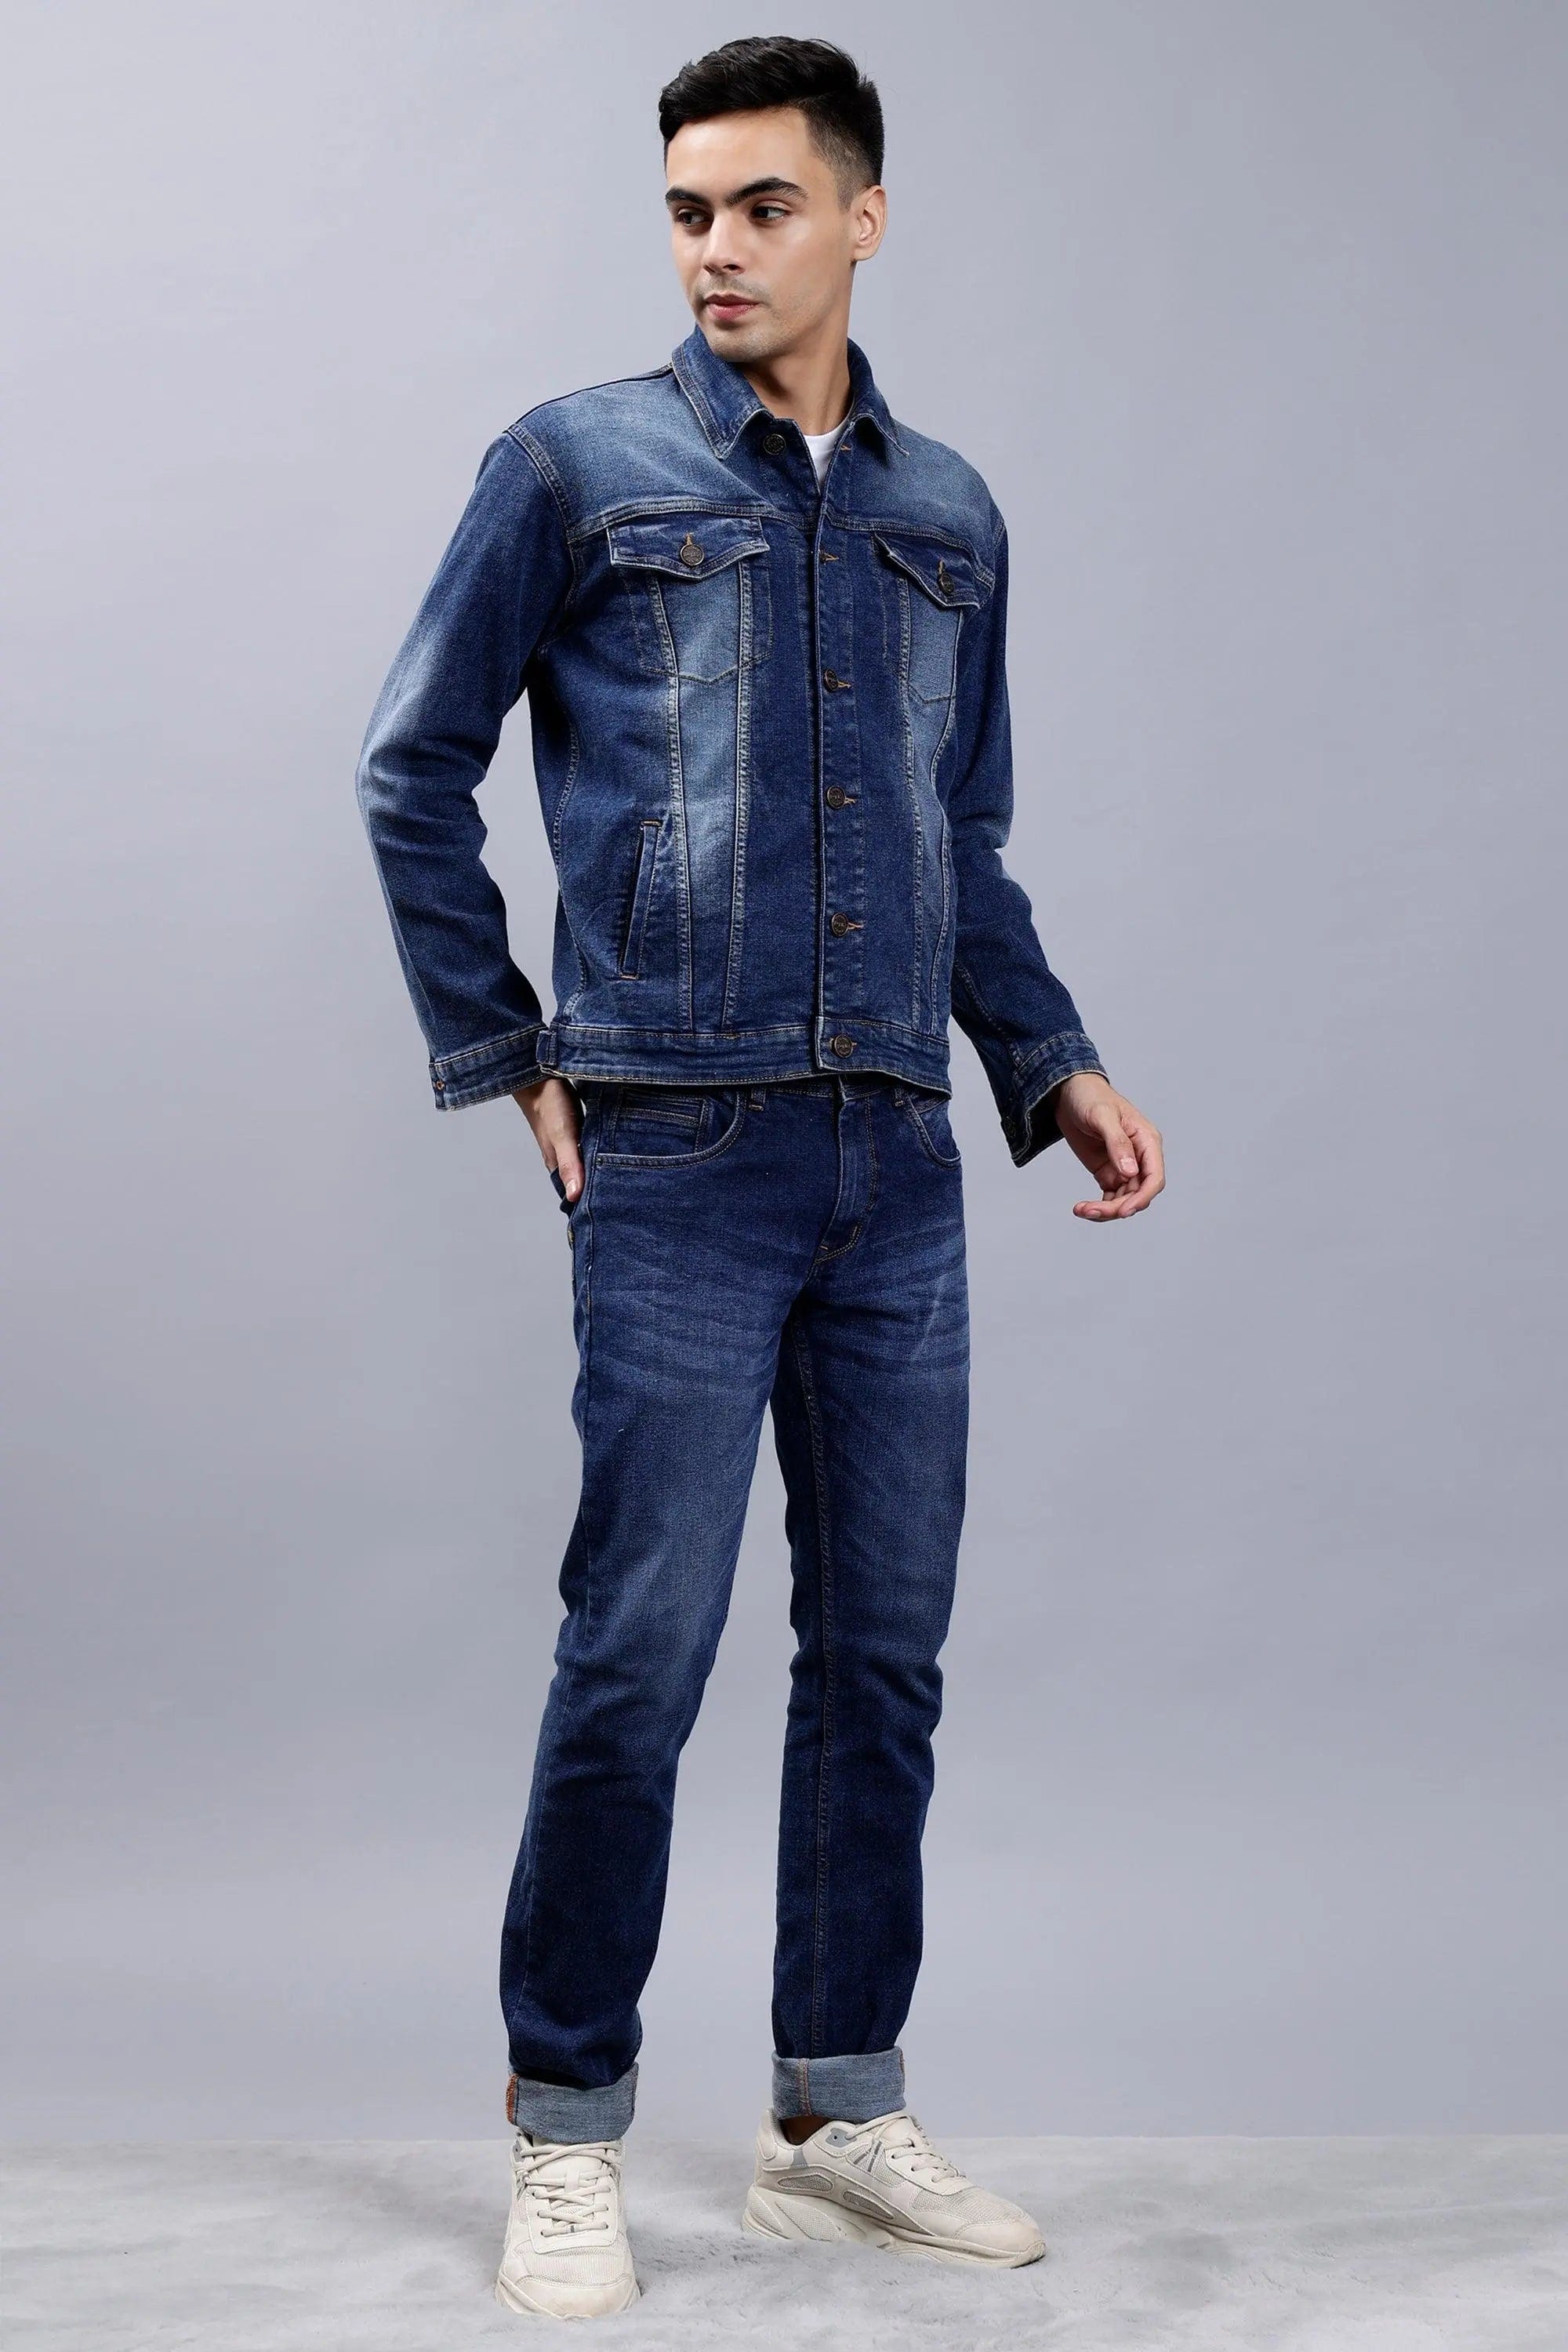 Buy Blue Jackets & Coats for Men by AERO JEANS Online | Ajio.com